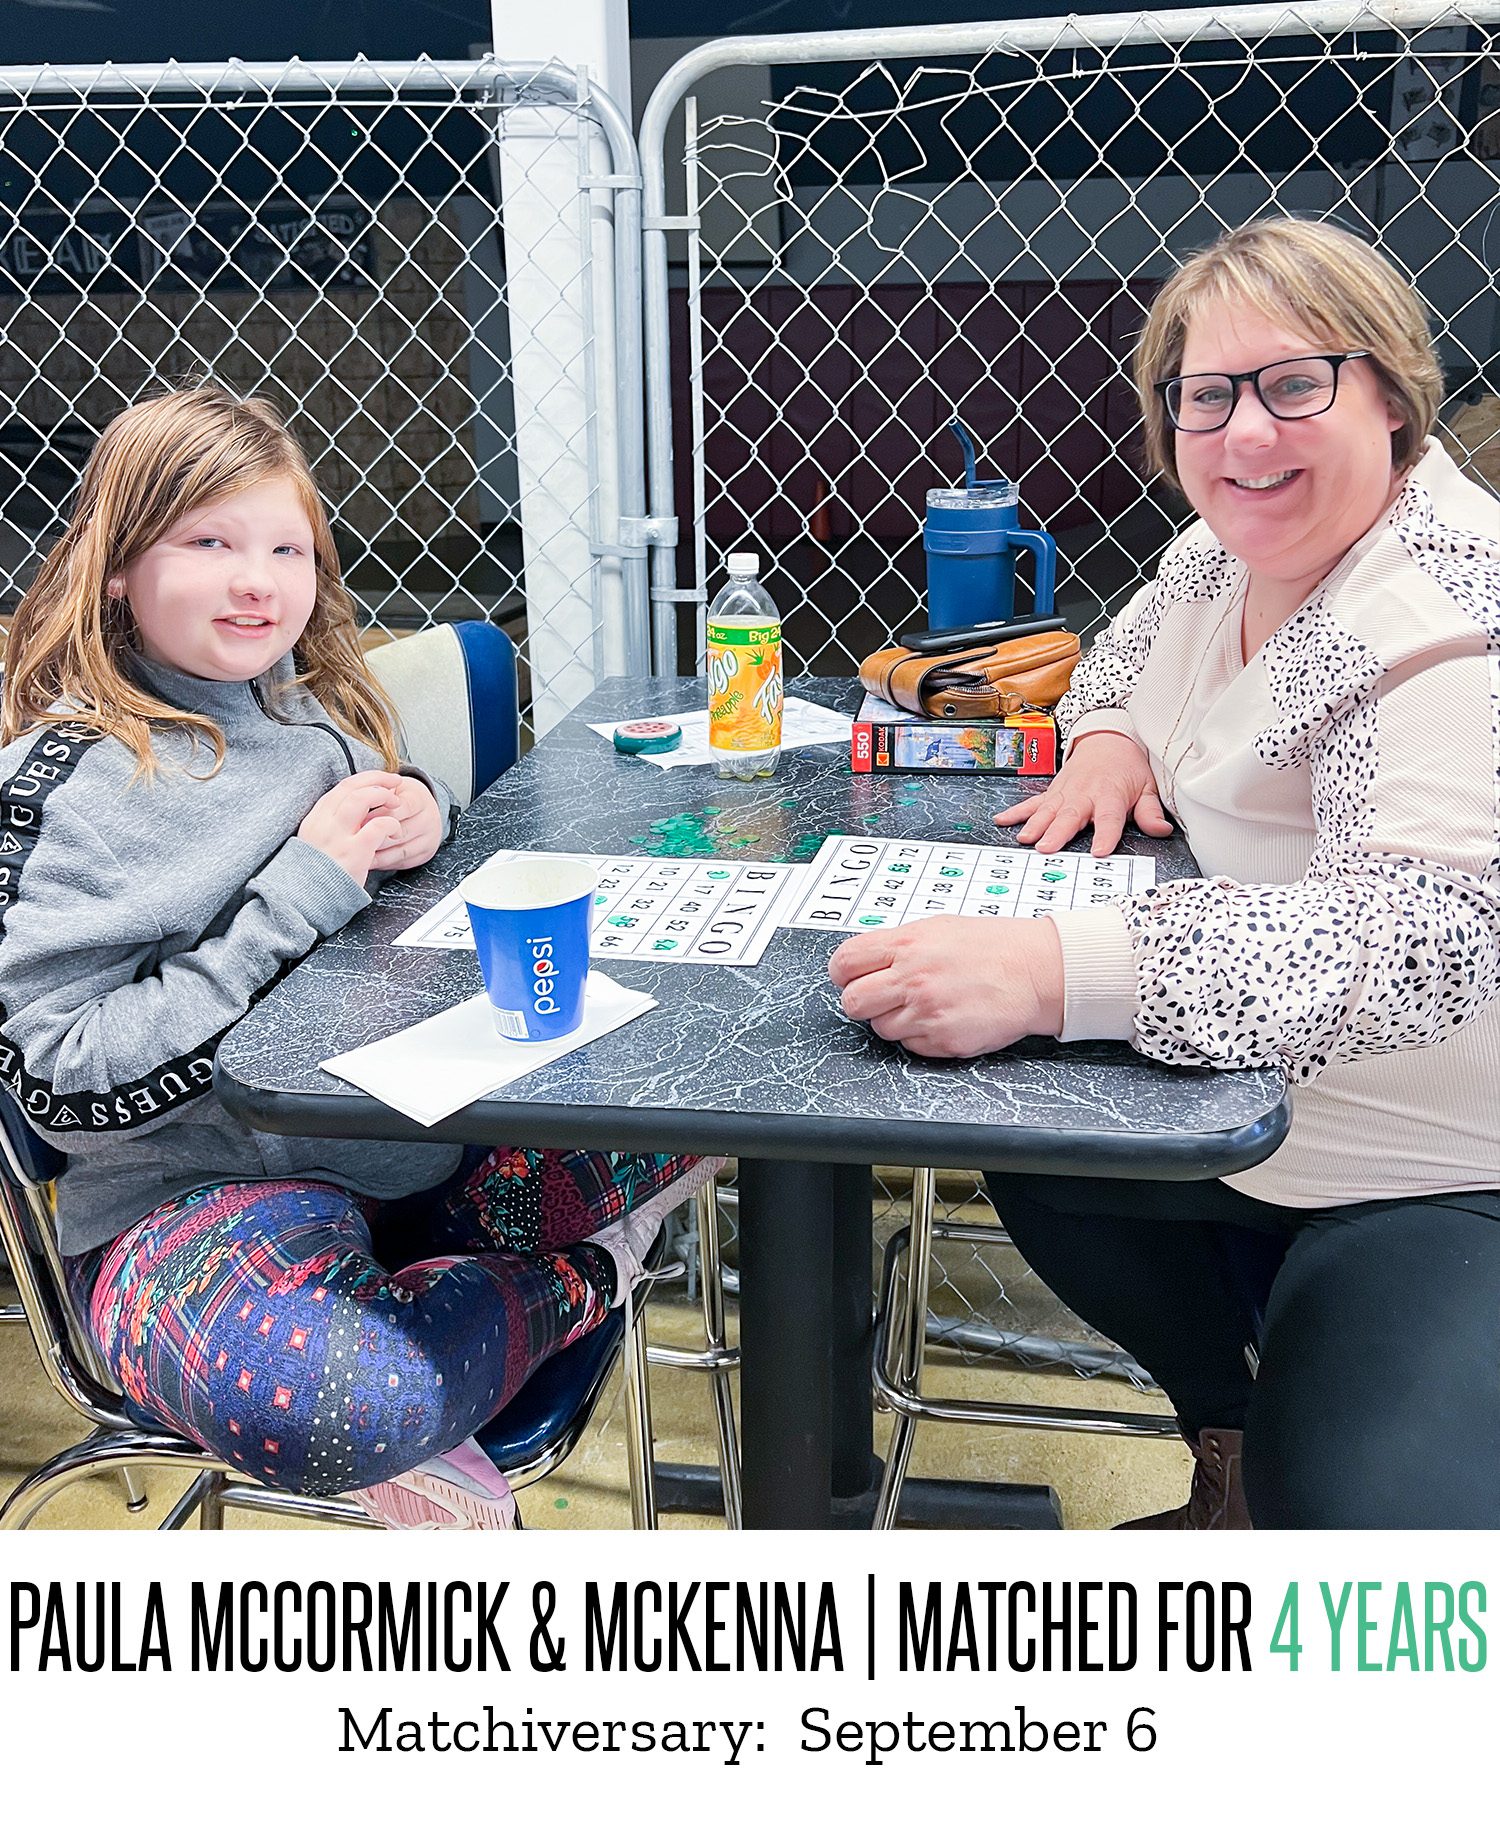 Paula McCormick and McKenna playing bingo together